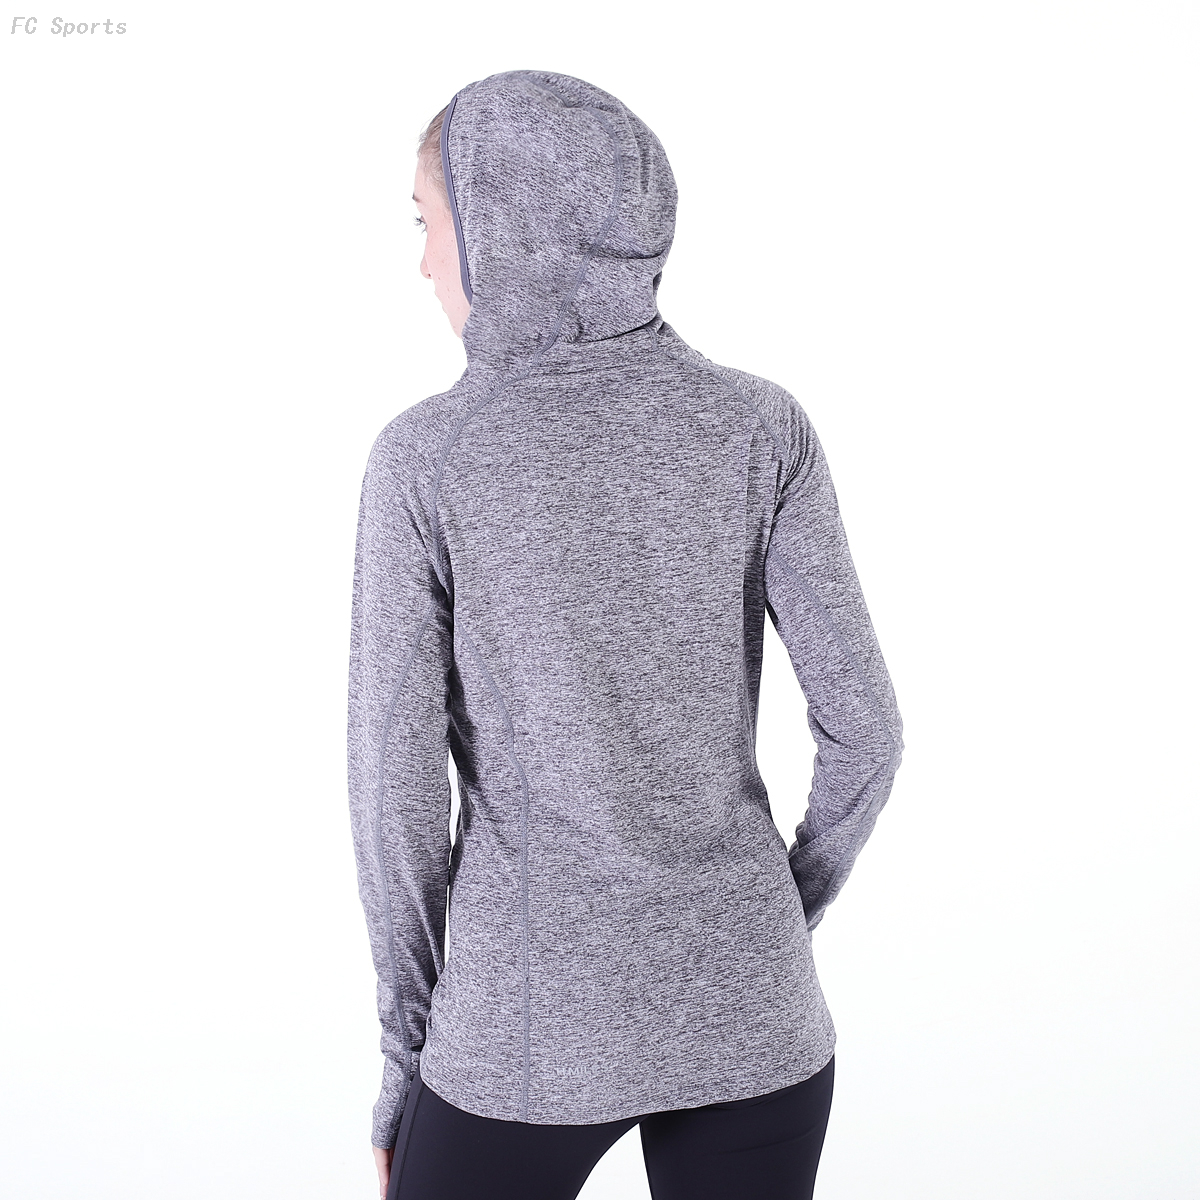 FC Sports Wear Yoga Long Shirt Pullover Hood Running Train Active Gym Wear For Women 